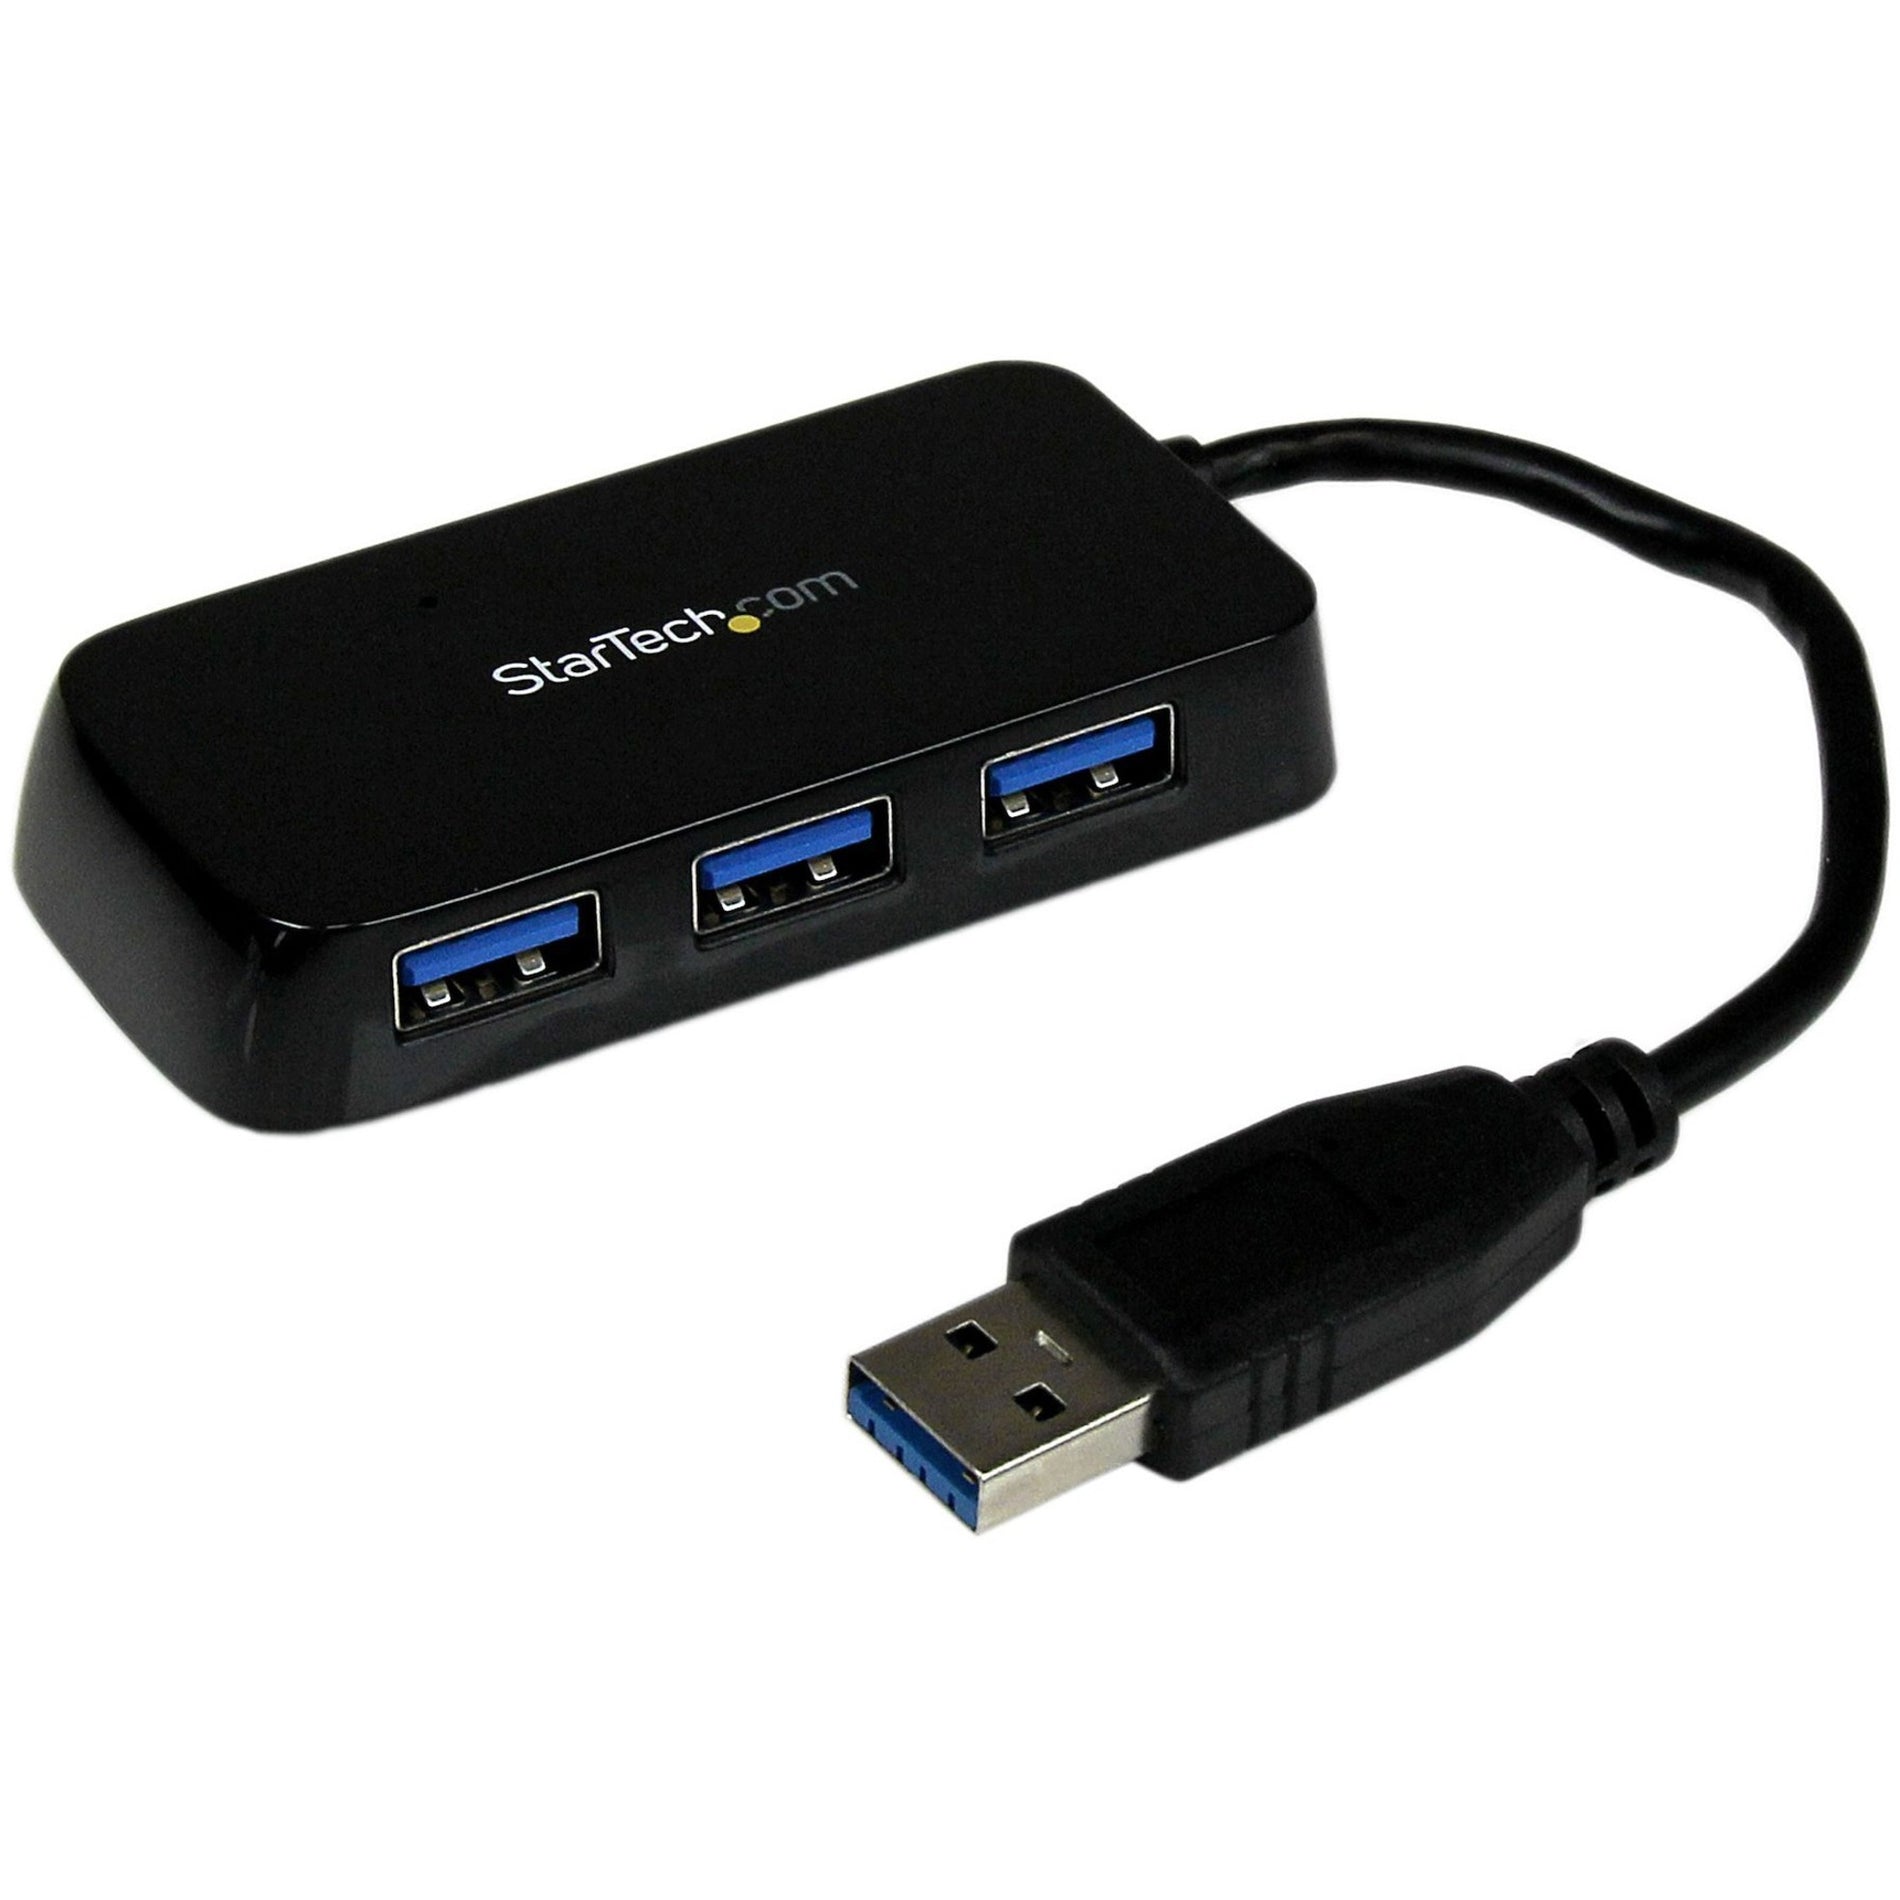 StarTech.com ST4300MINU3B Portable 4 Port SuperSpeed Mini USB 3.0 Hub - Black, 2 Year Warranty, Mac/PC Compatible, Lightweight Design